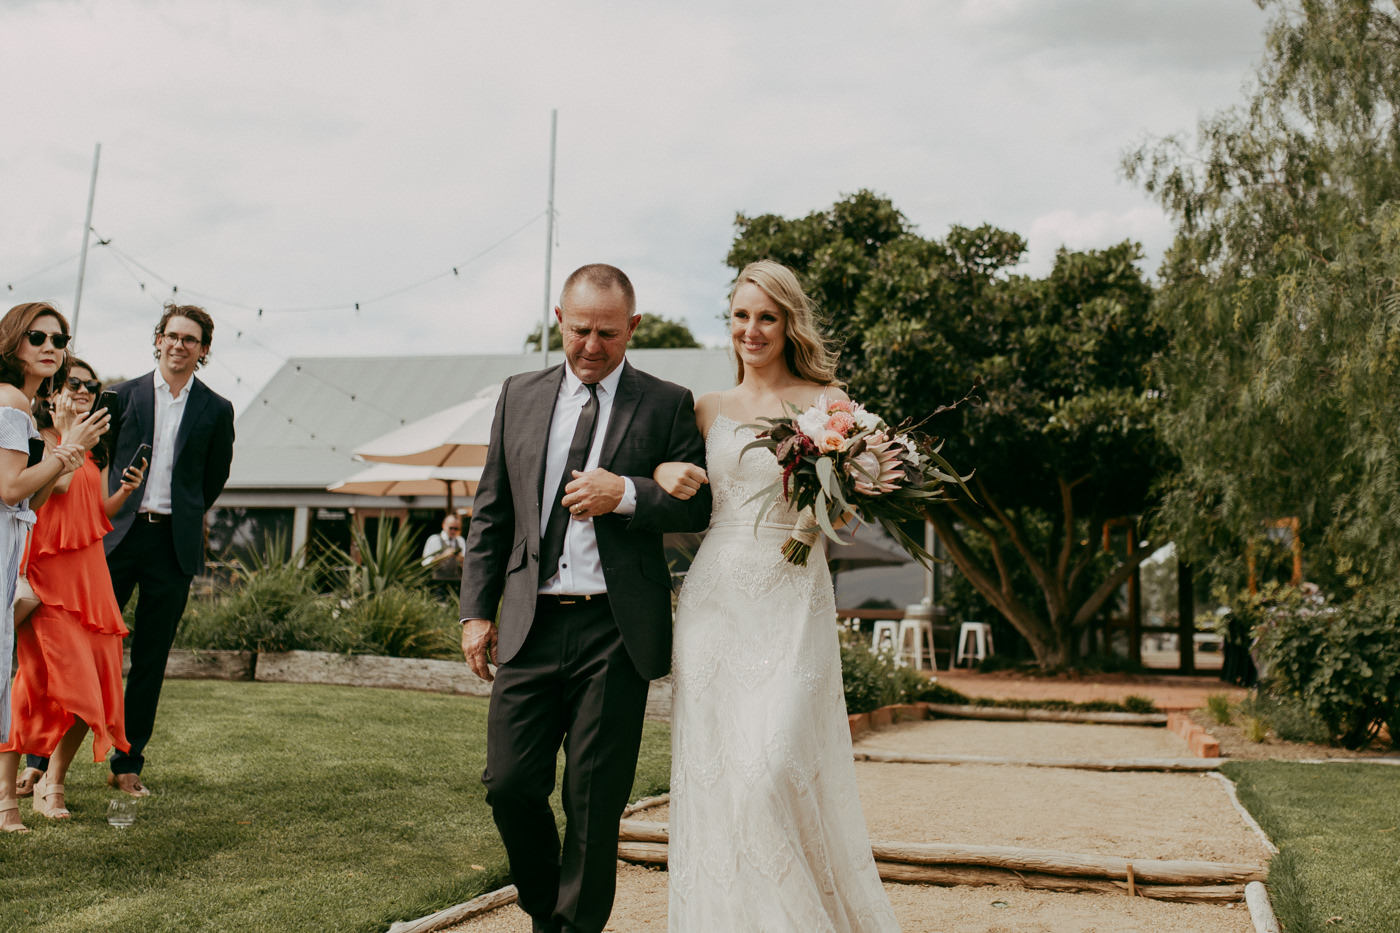 Anthony & Eliet - Wagga Wagga Wedding - Country NSW - Samantha Heather Photography-96.jpg